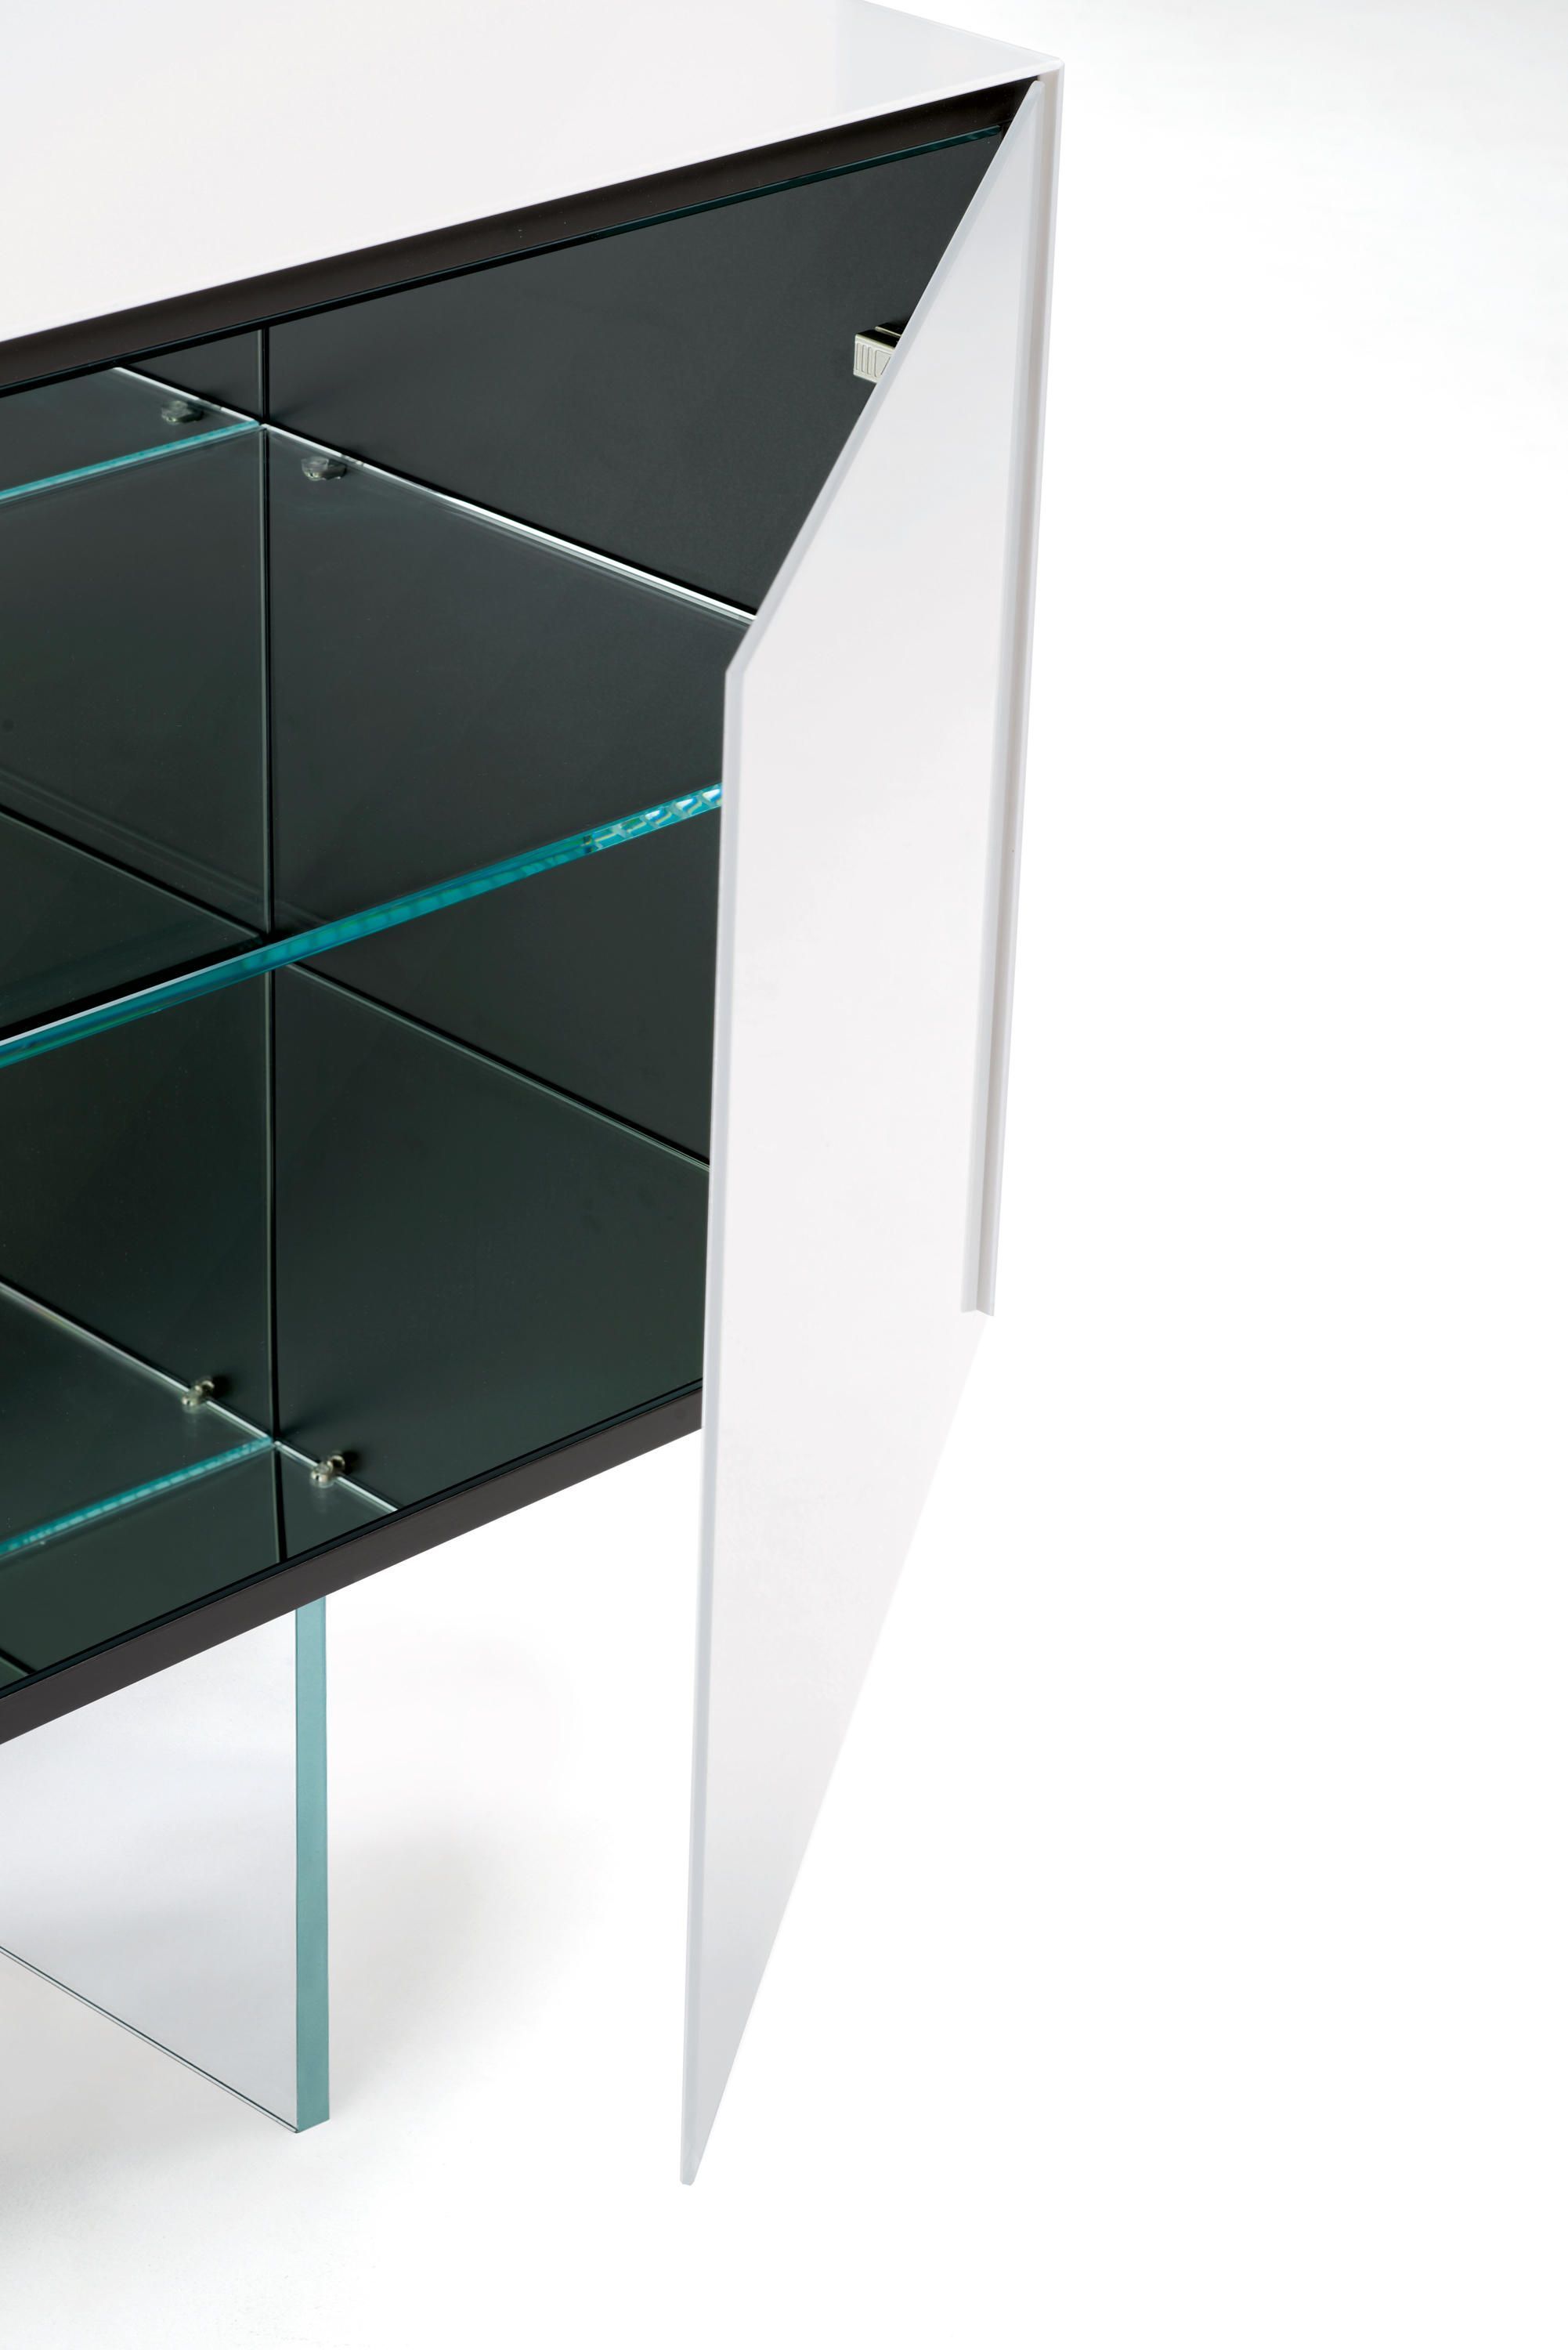 MAGIC BOX - Sideboards from Glas Italia | Architonic - MAGIC BOX - Sideboards from Glas Italia | Architonic -   16 beauty Box italia ideas